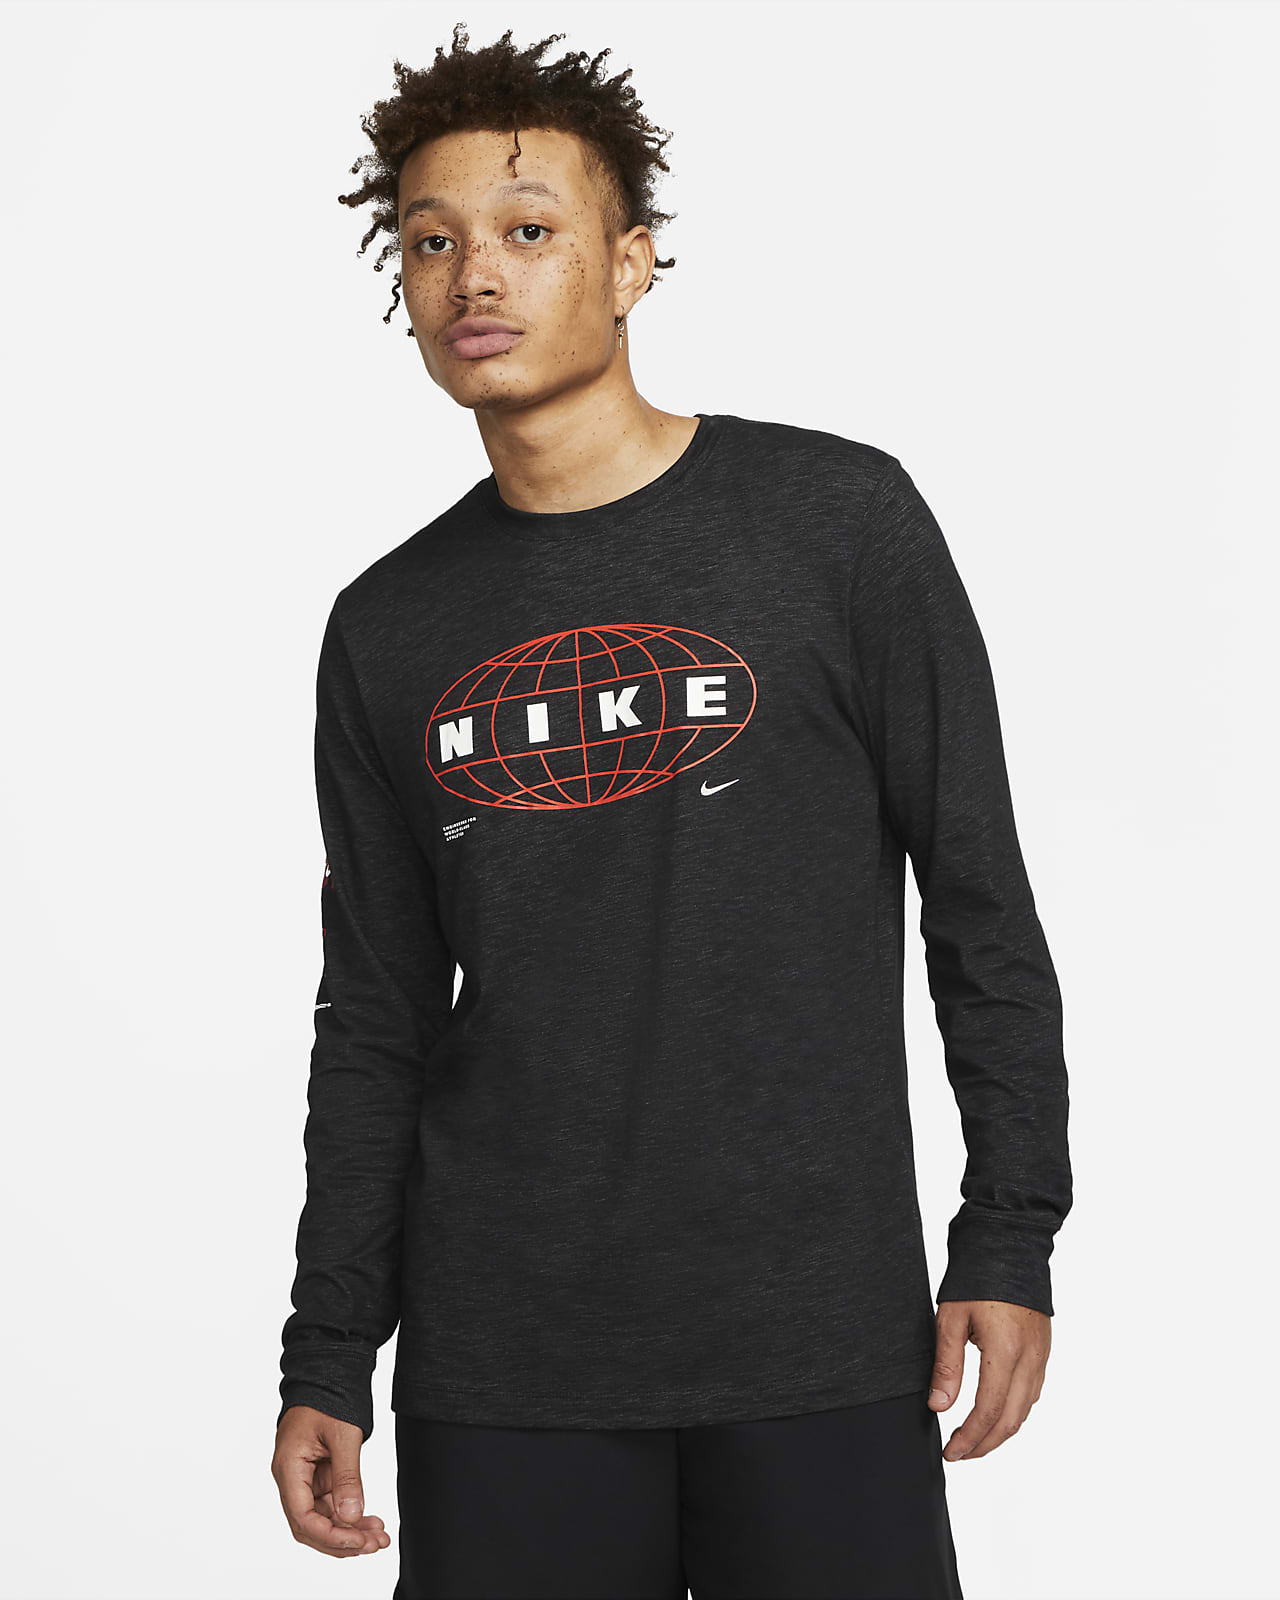 Nike Dri-FIT Langarm-Trainings-T-Shirt für Herren